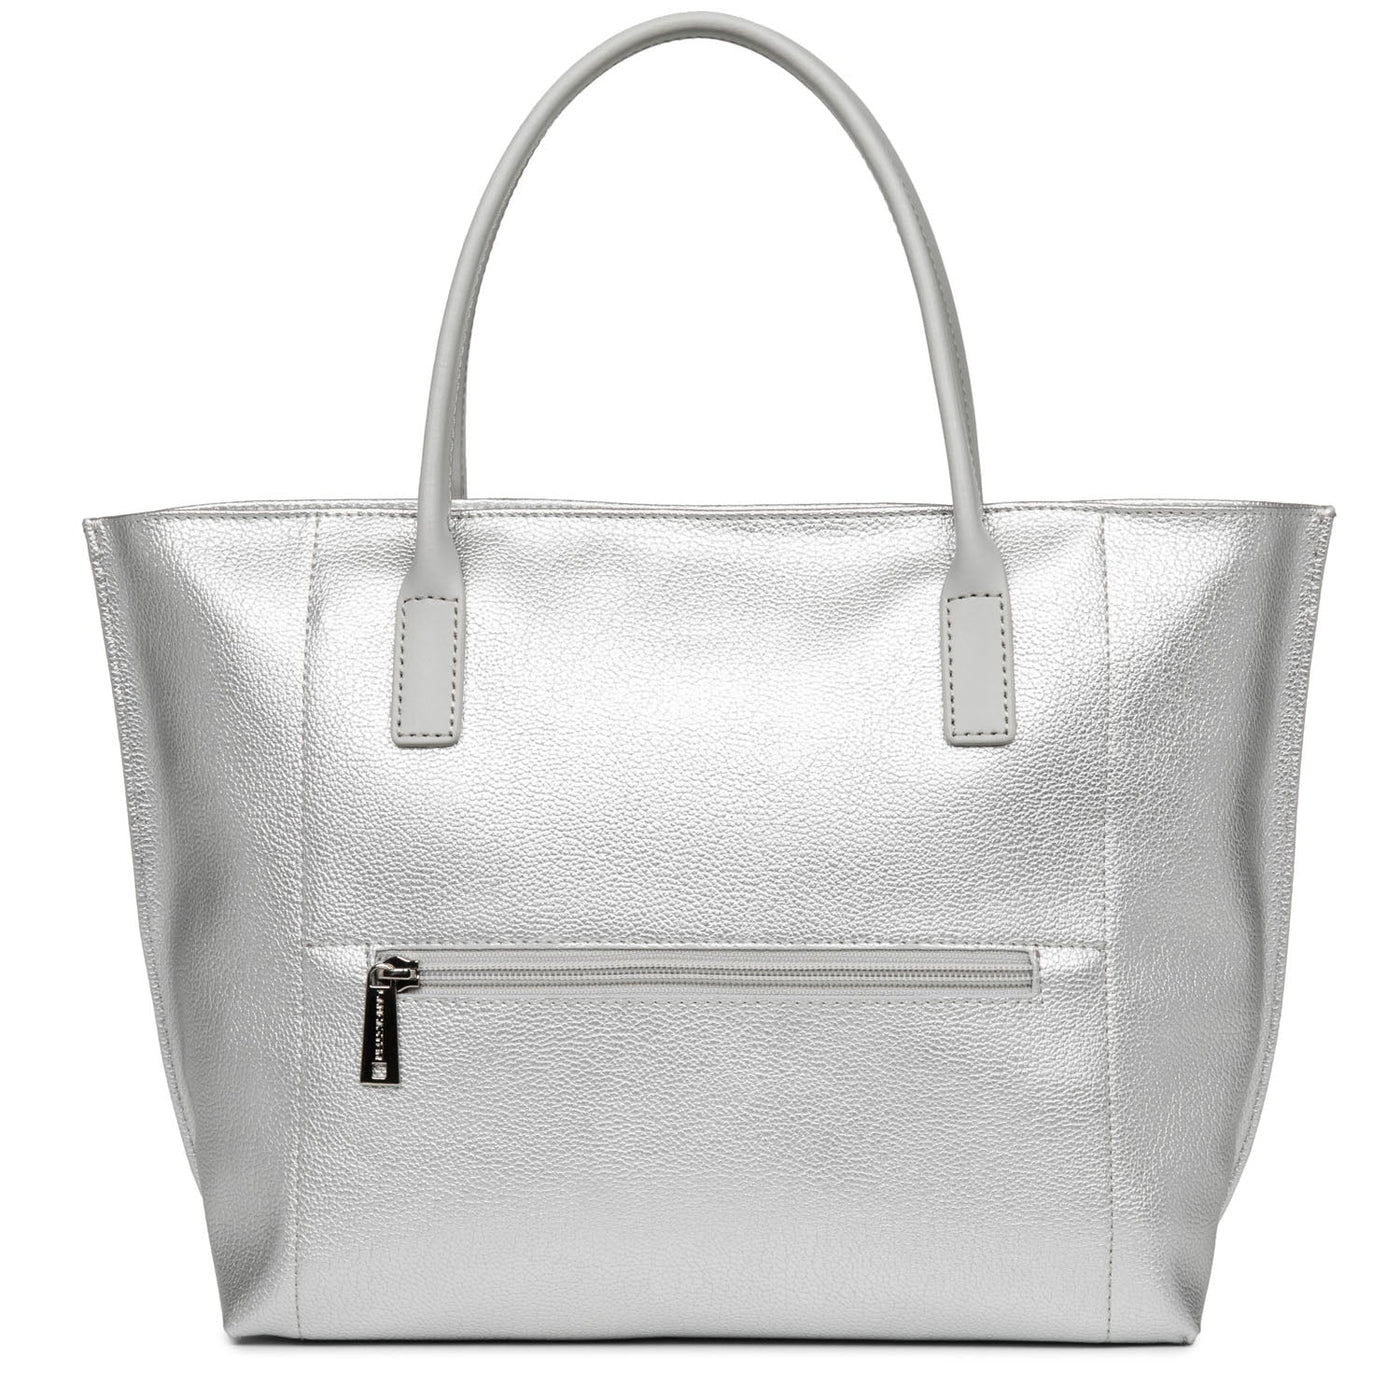 m handbag - maya #couleur_argent-blanc-gris-perle